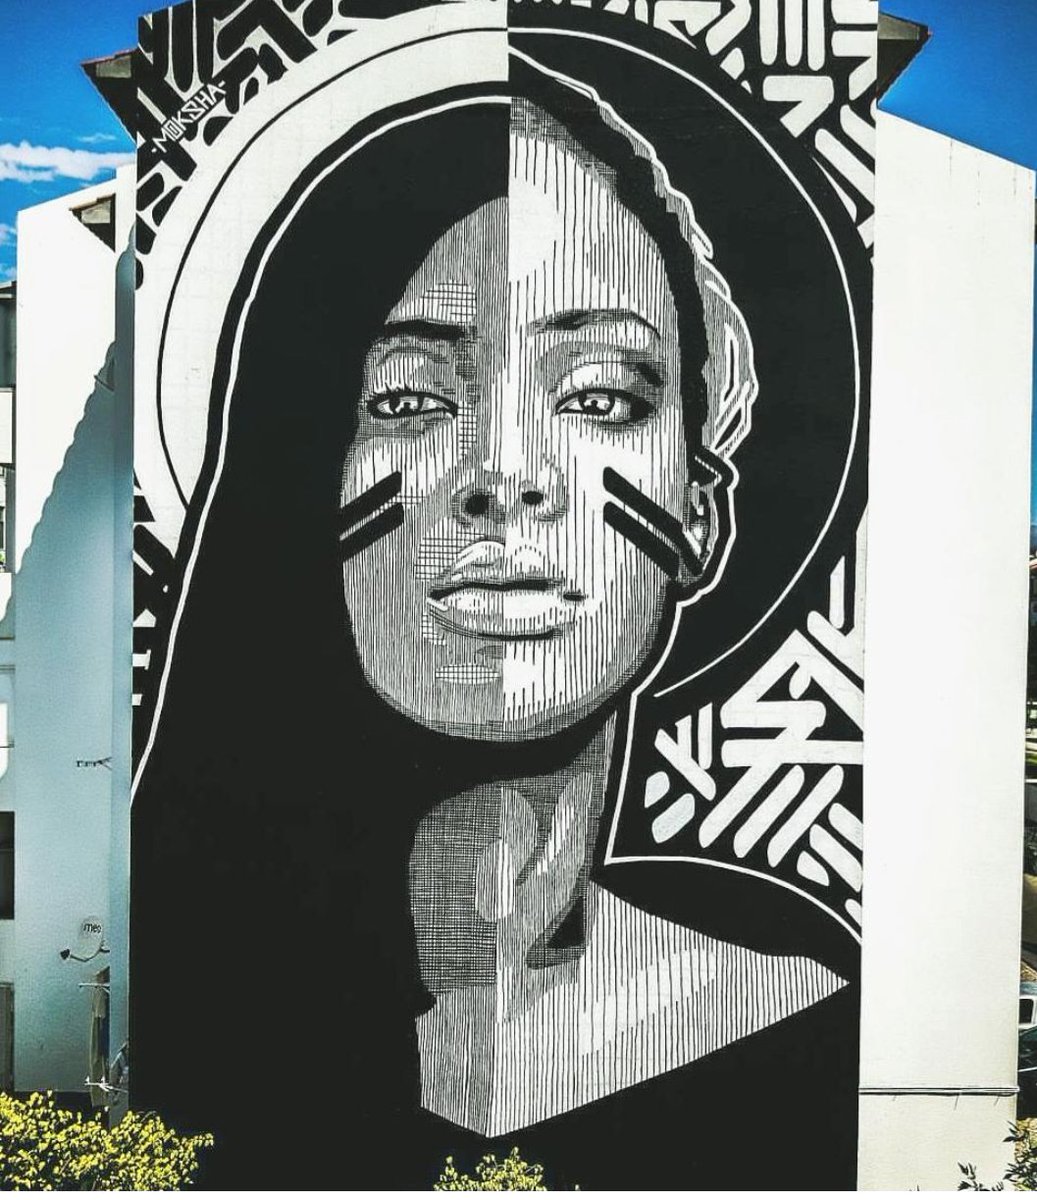 'black or white' by #huariu in #cascais #portugal #art #streetart #contemporaryart #street #streetphotography #urbanart #urbanwalls